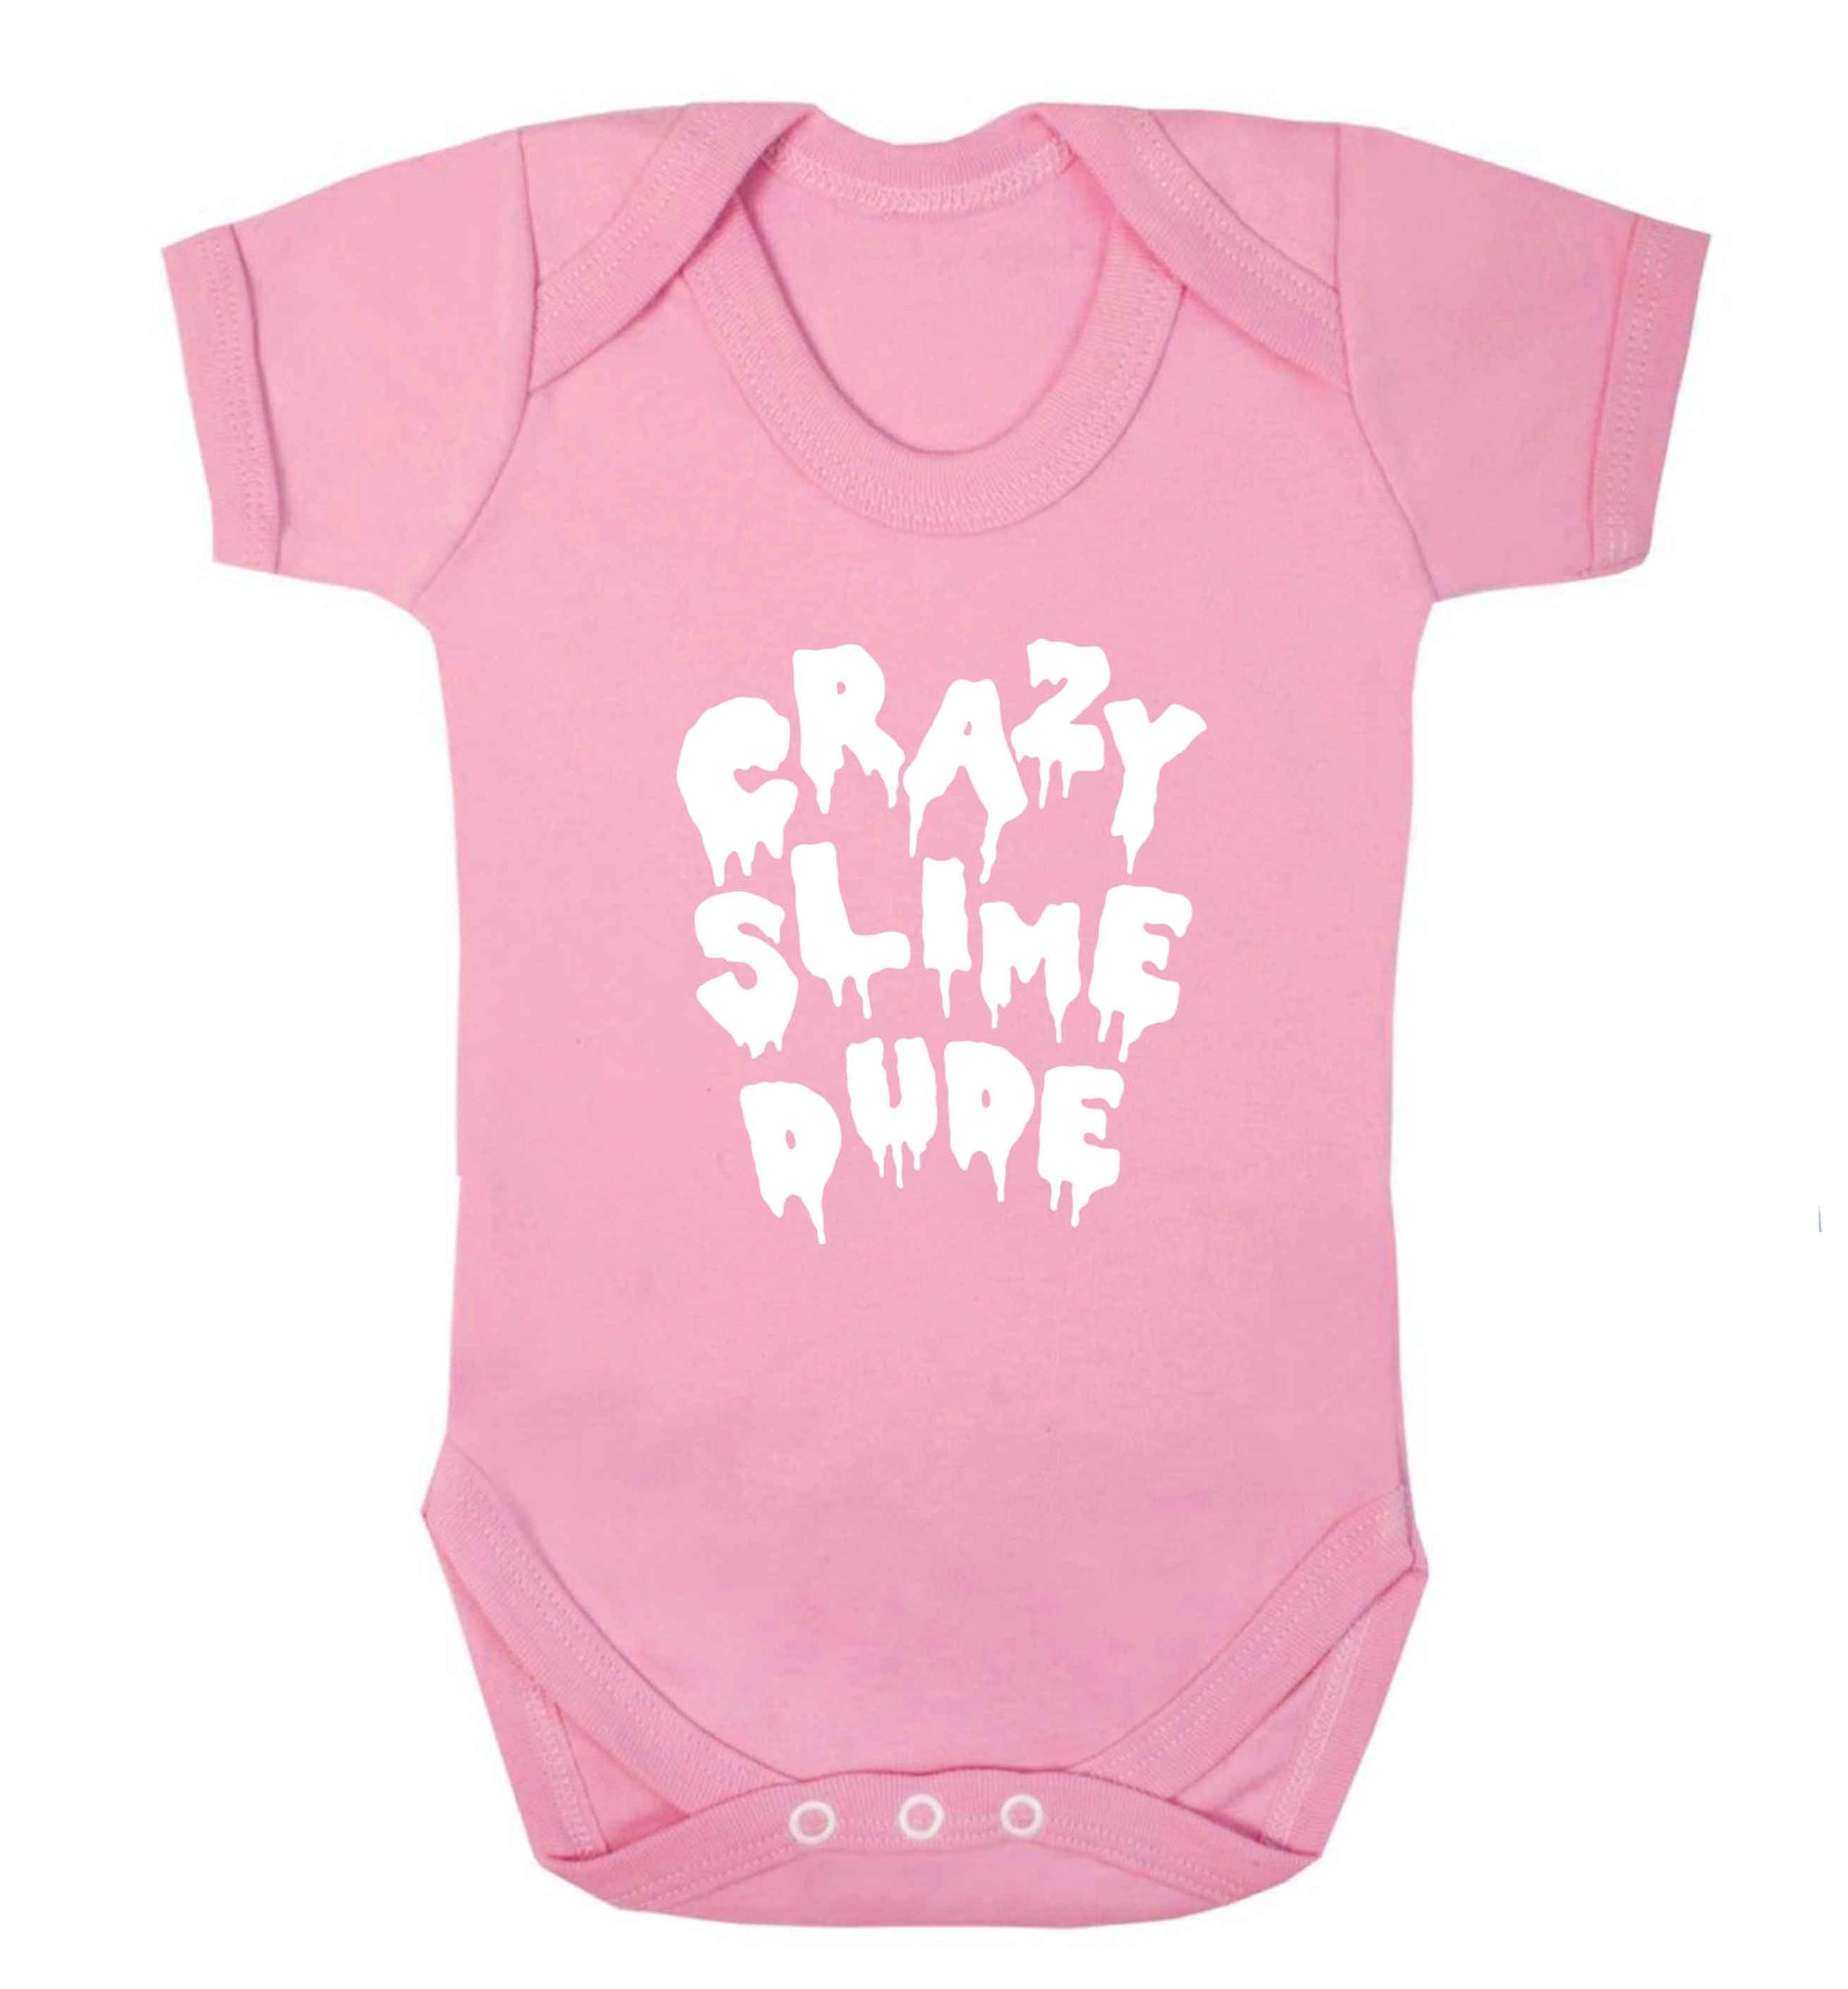 Crazy slime dude baby vest pale pink 18-24 months